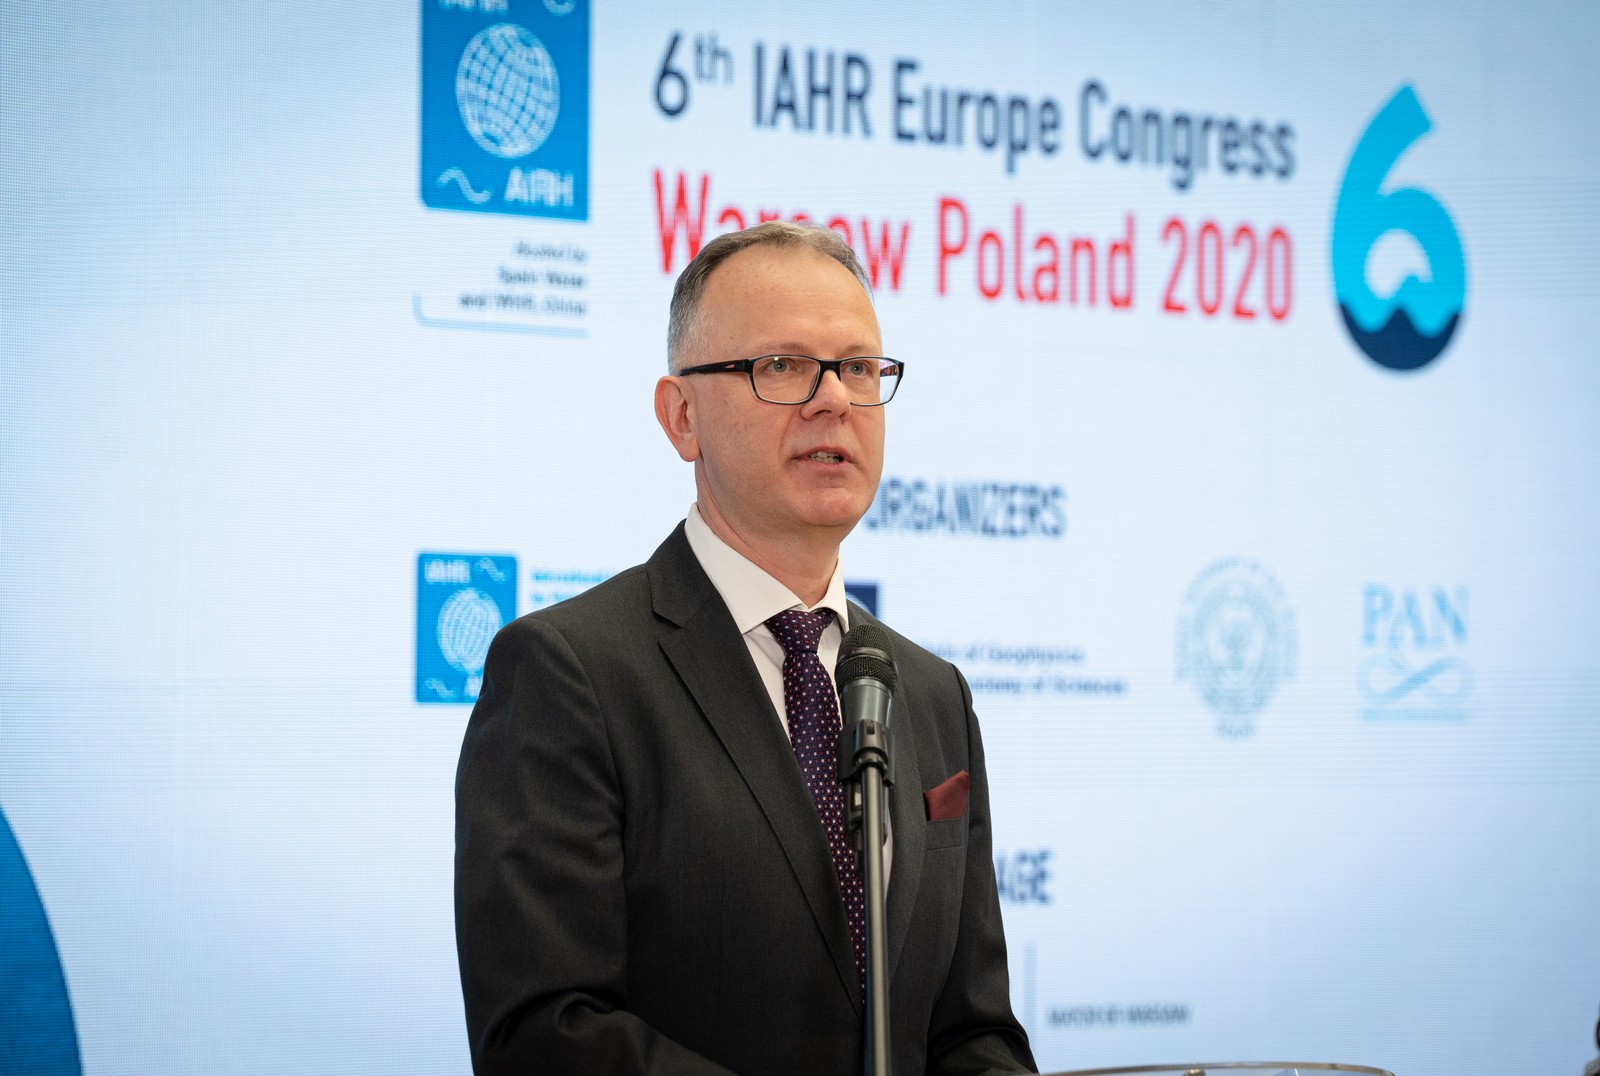 Pawel Rowinski during the 6th IAHR Europe Congress